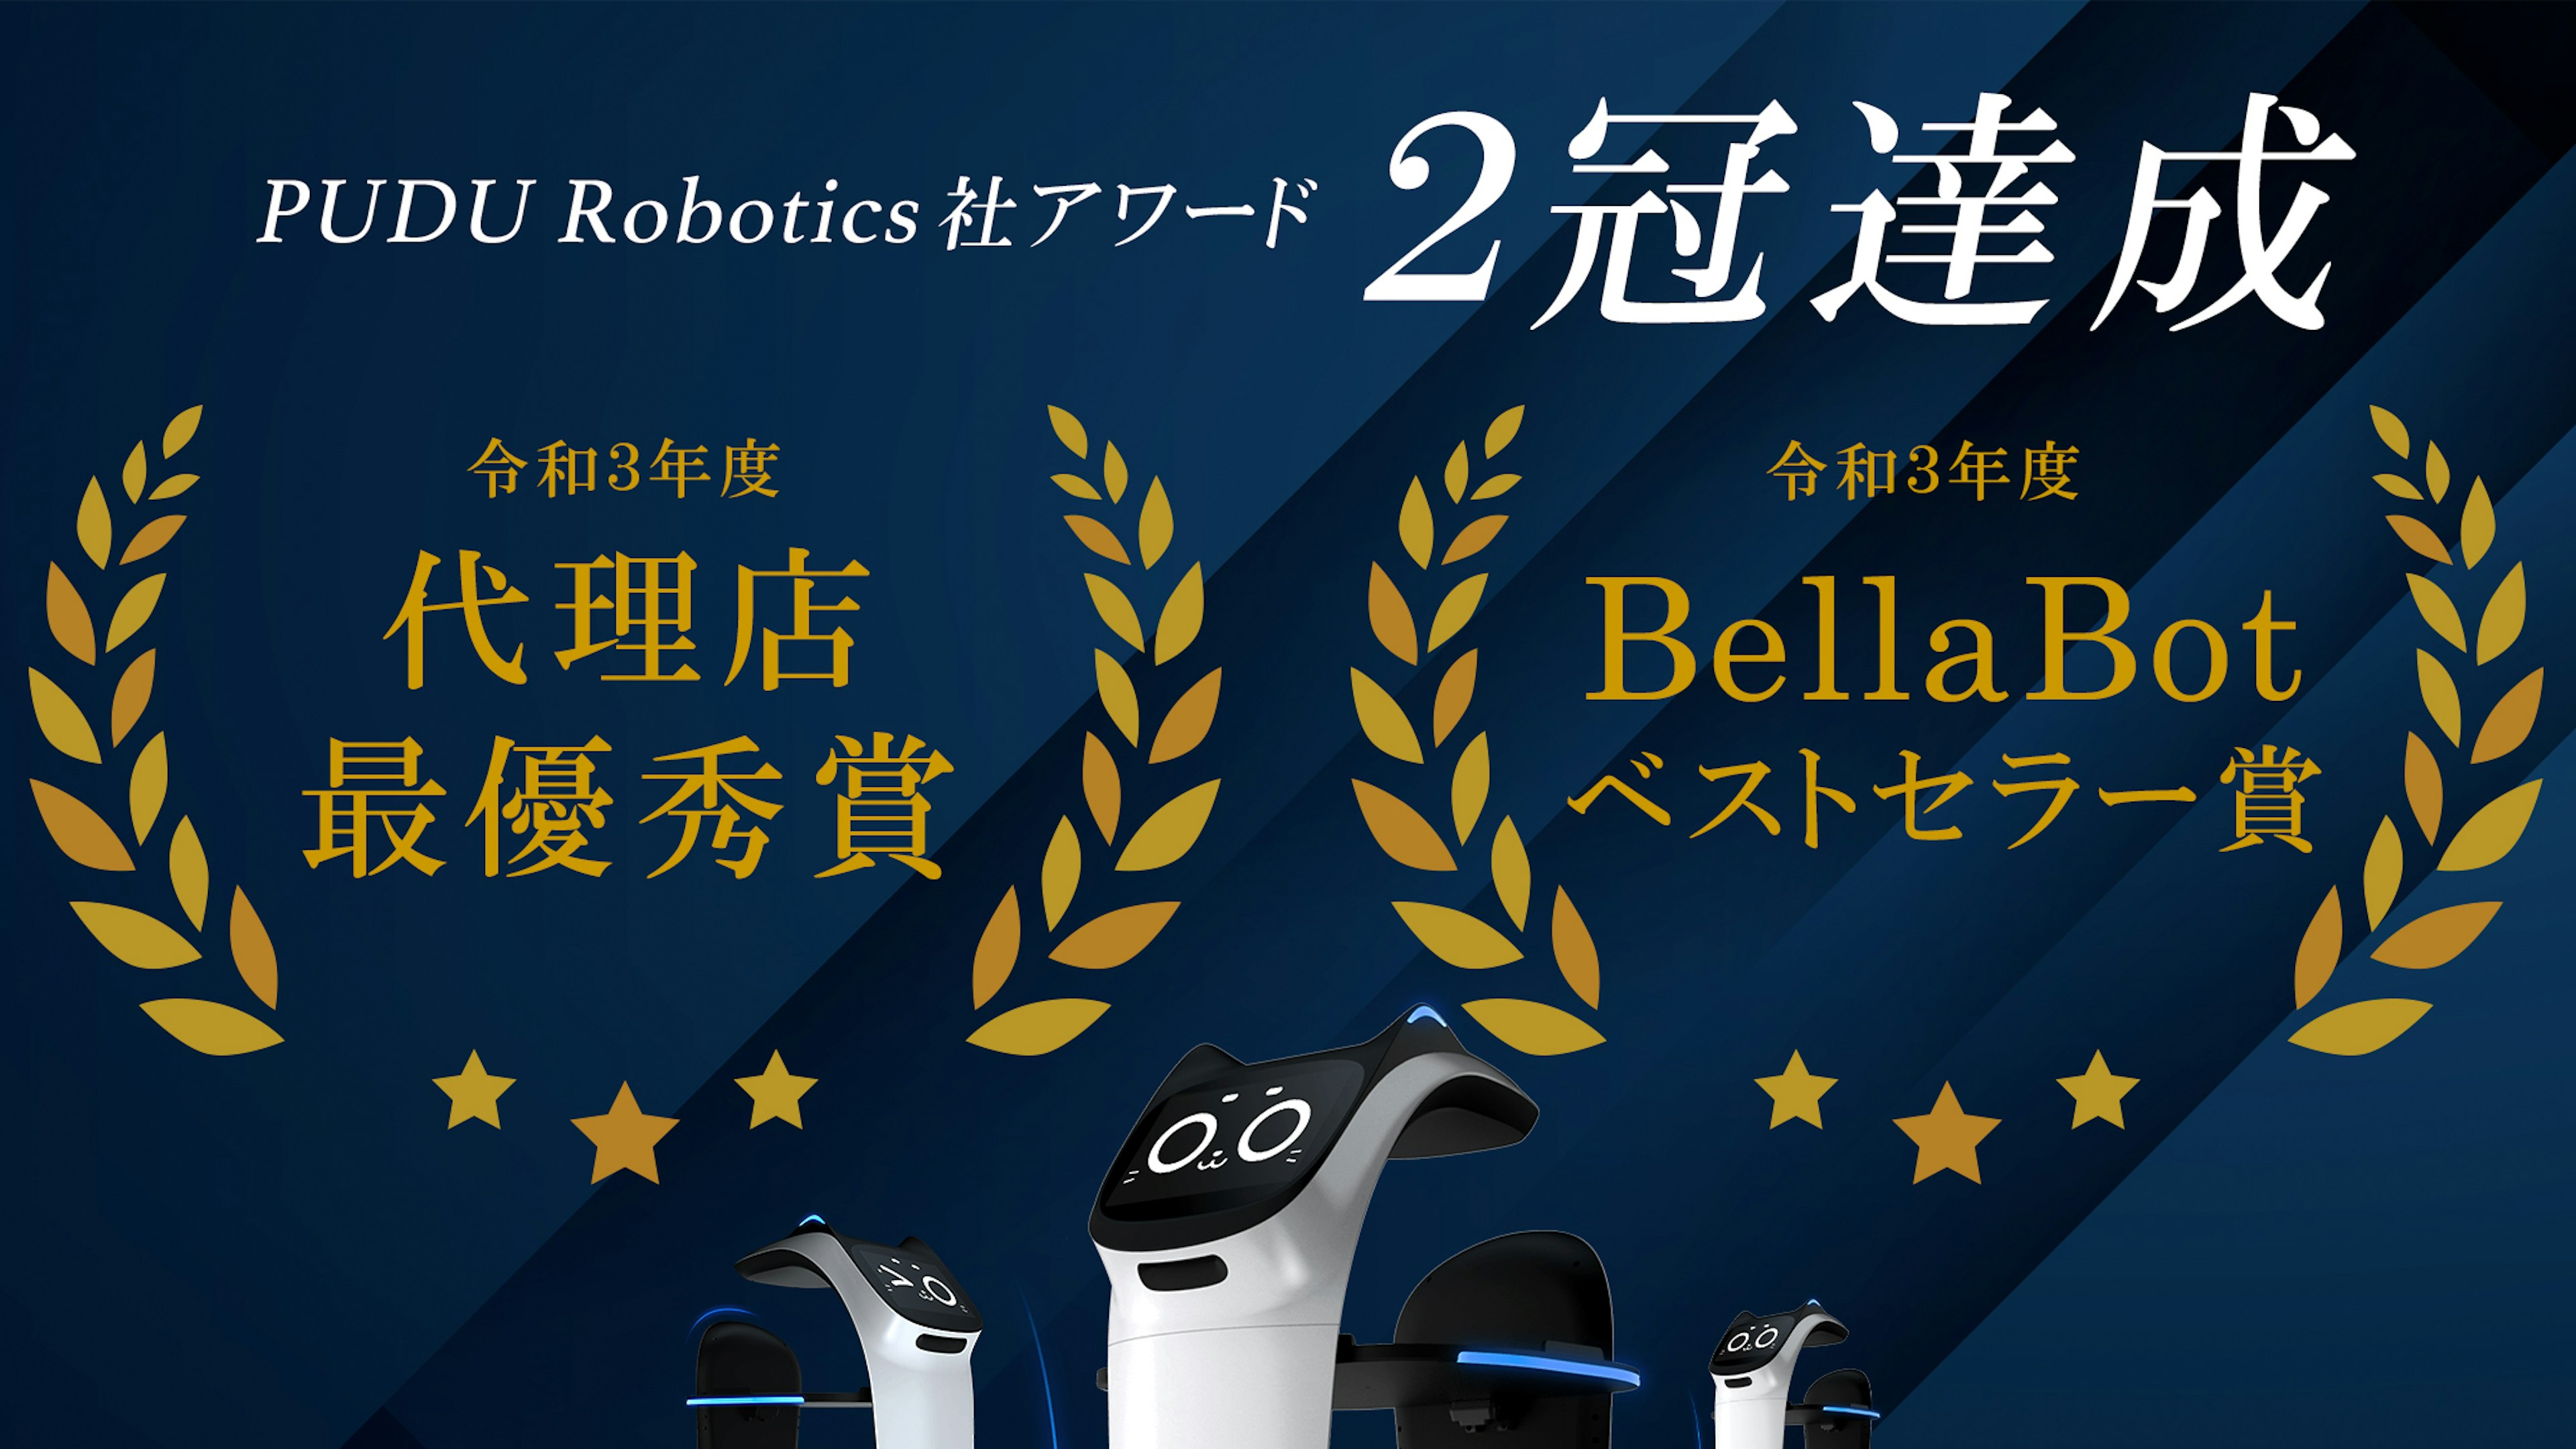 PUDU Robotics社授賞式にて最優秀賞・BellaBotベストセラー賞の二冠を達成！のキービジュアル